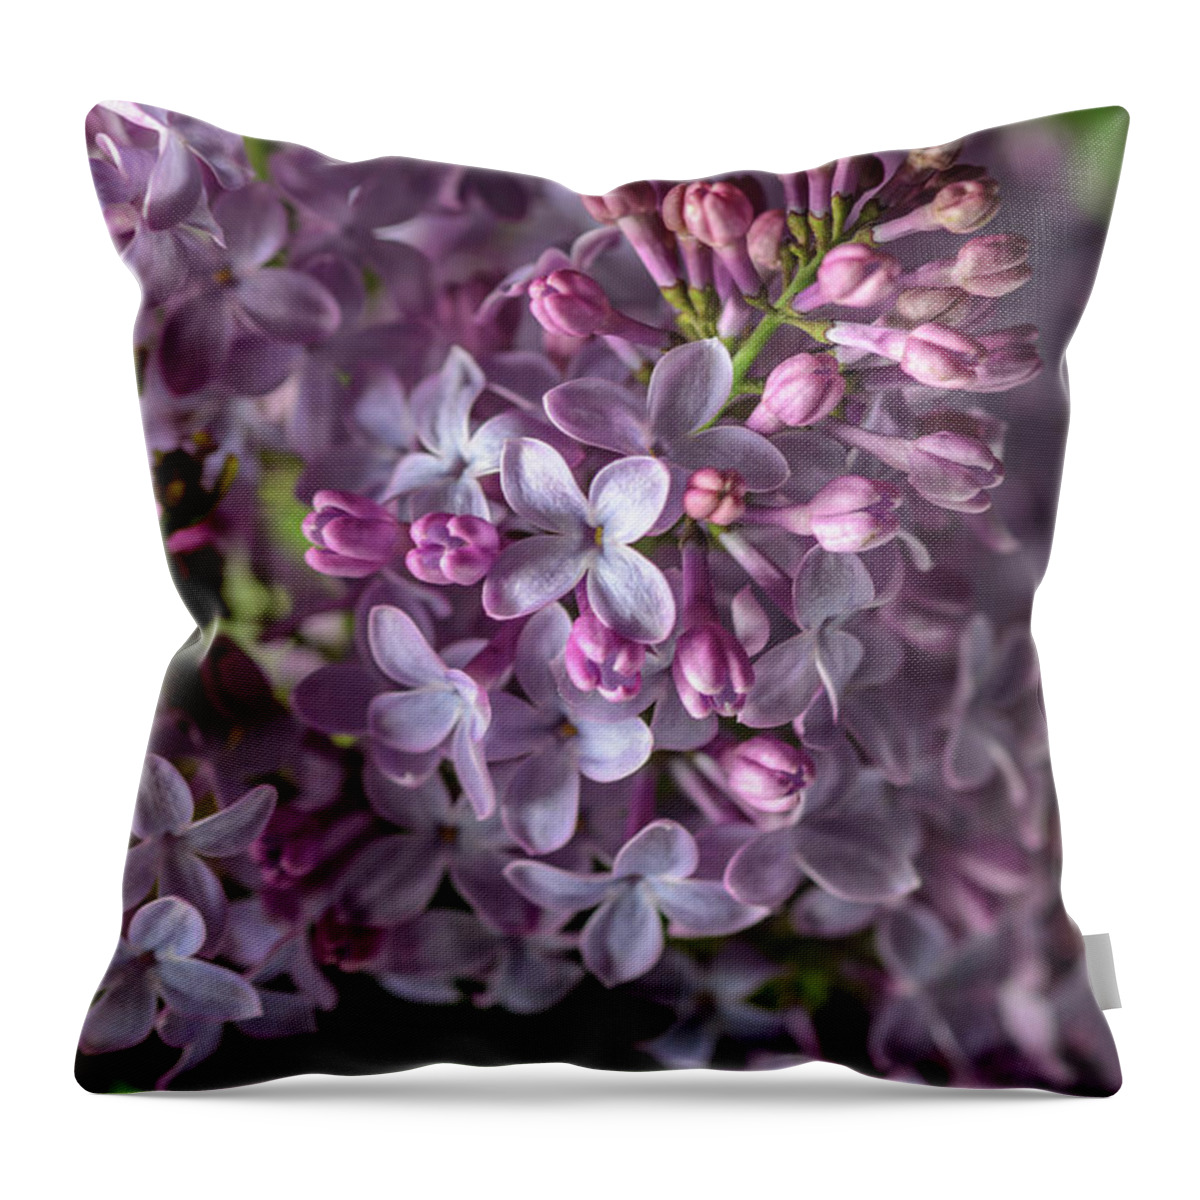 Lilacs Throw Pillow featuring the photograph Lilac Bouquet by Tamara Becker